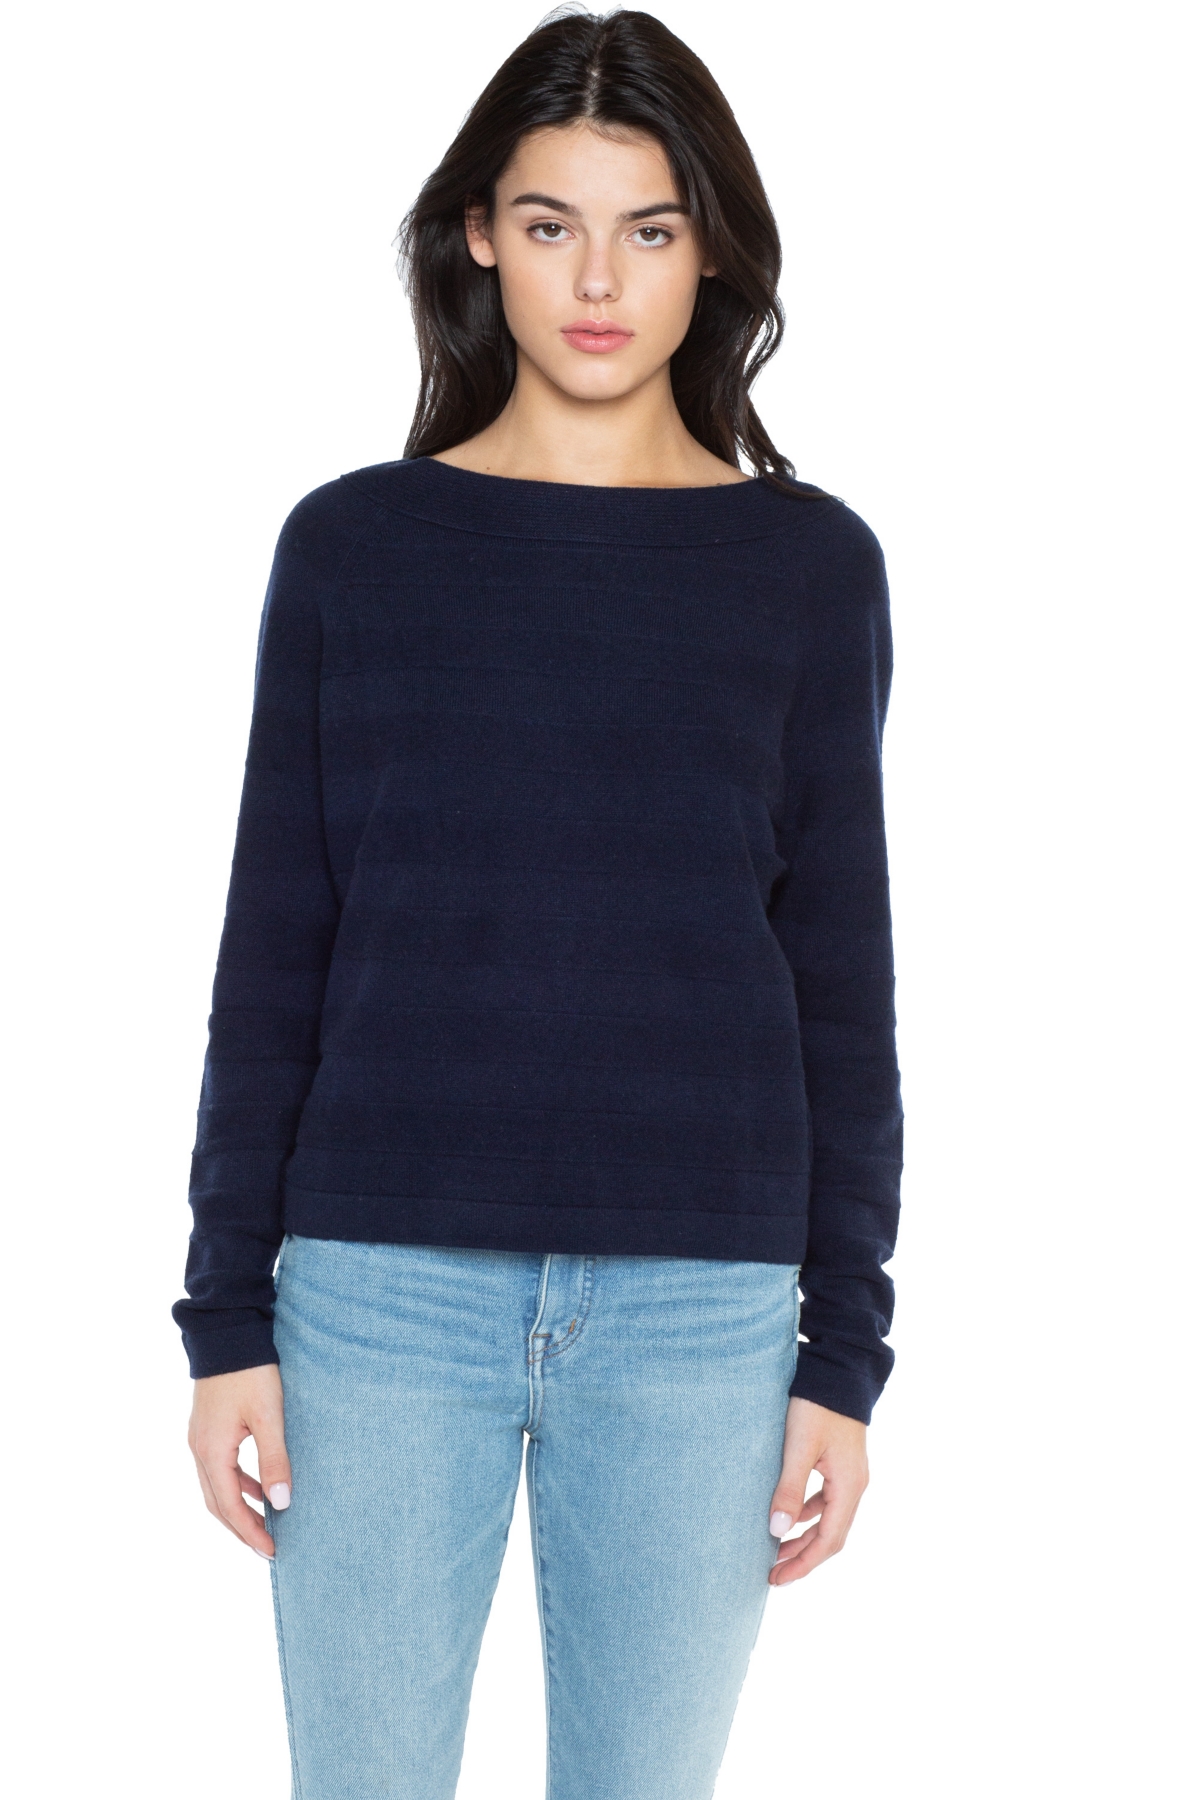 Women's 100% Pure Cashmere Horizontal Rib Boatneck Raglan Sweater - Navy